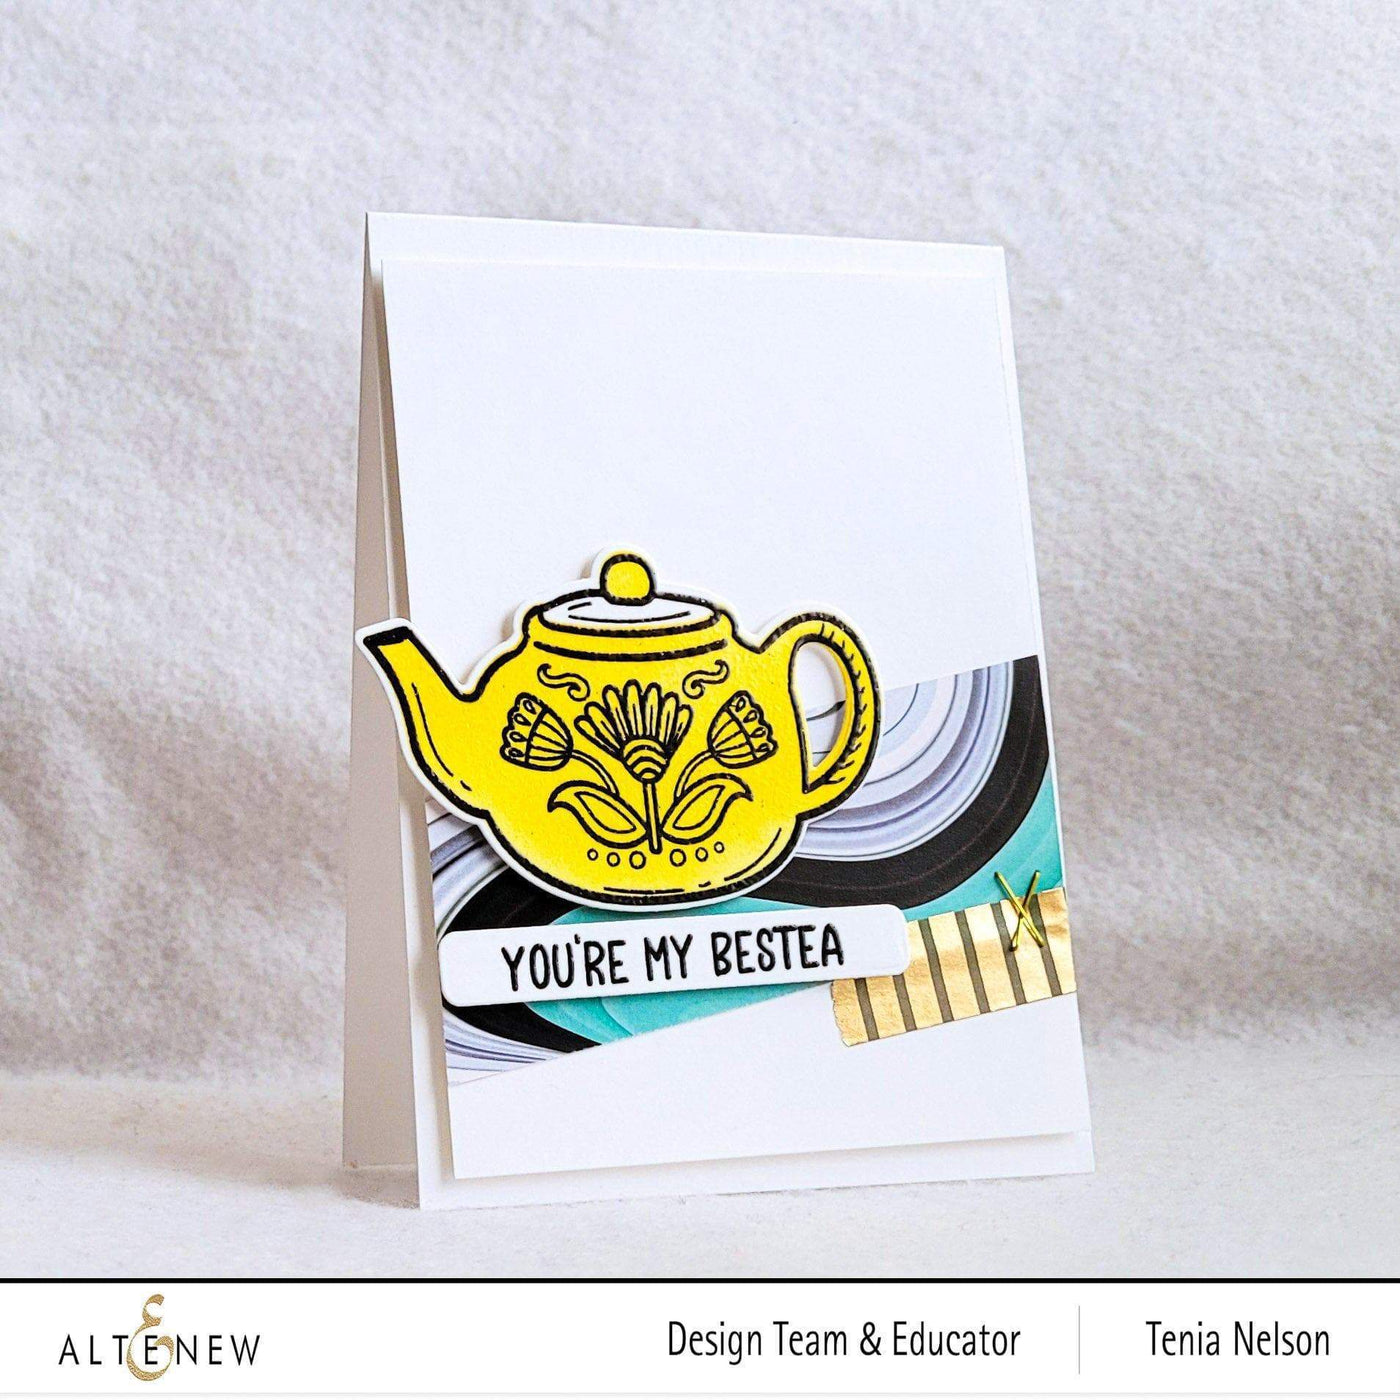 Stamp & Die & Stencil Bundle Tea For Two